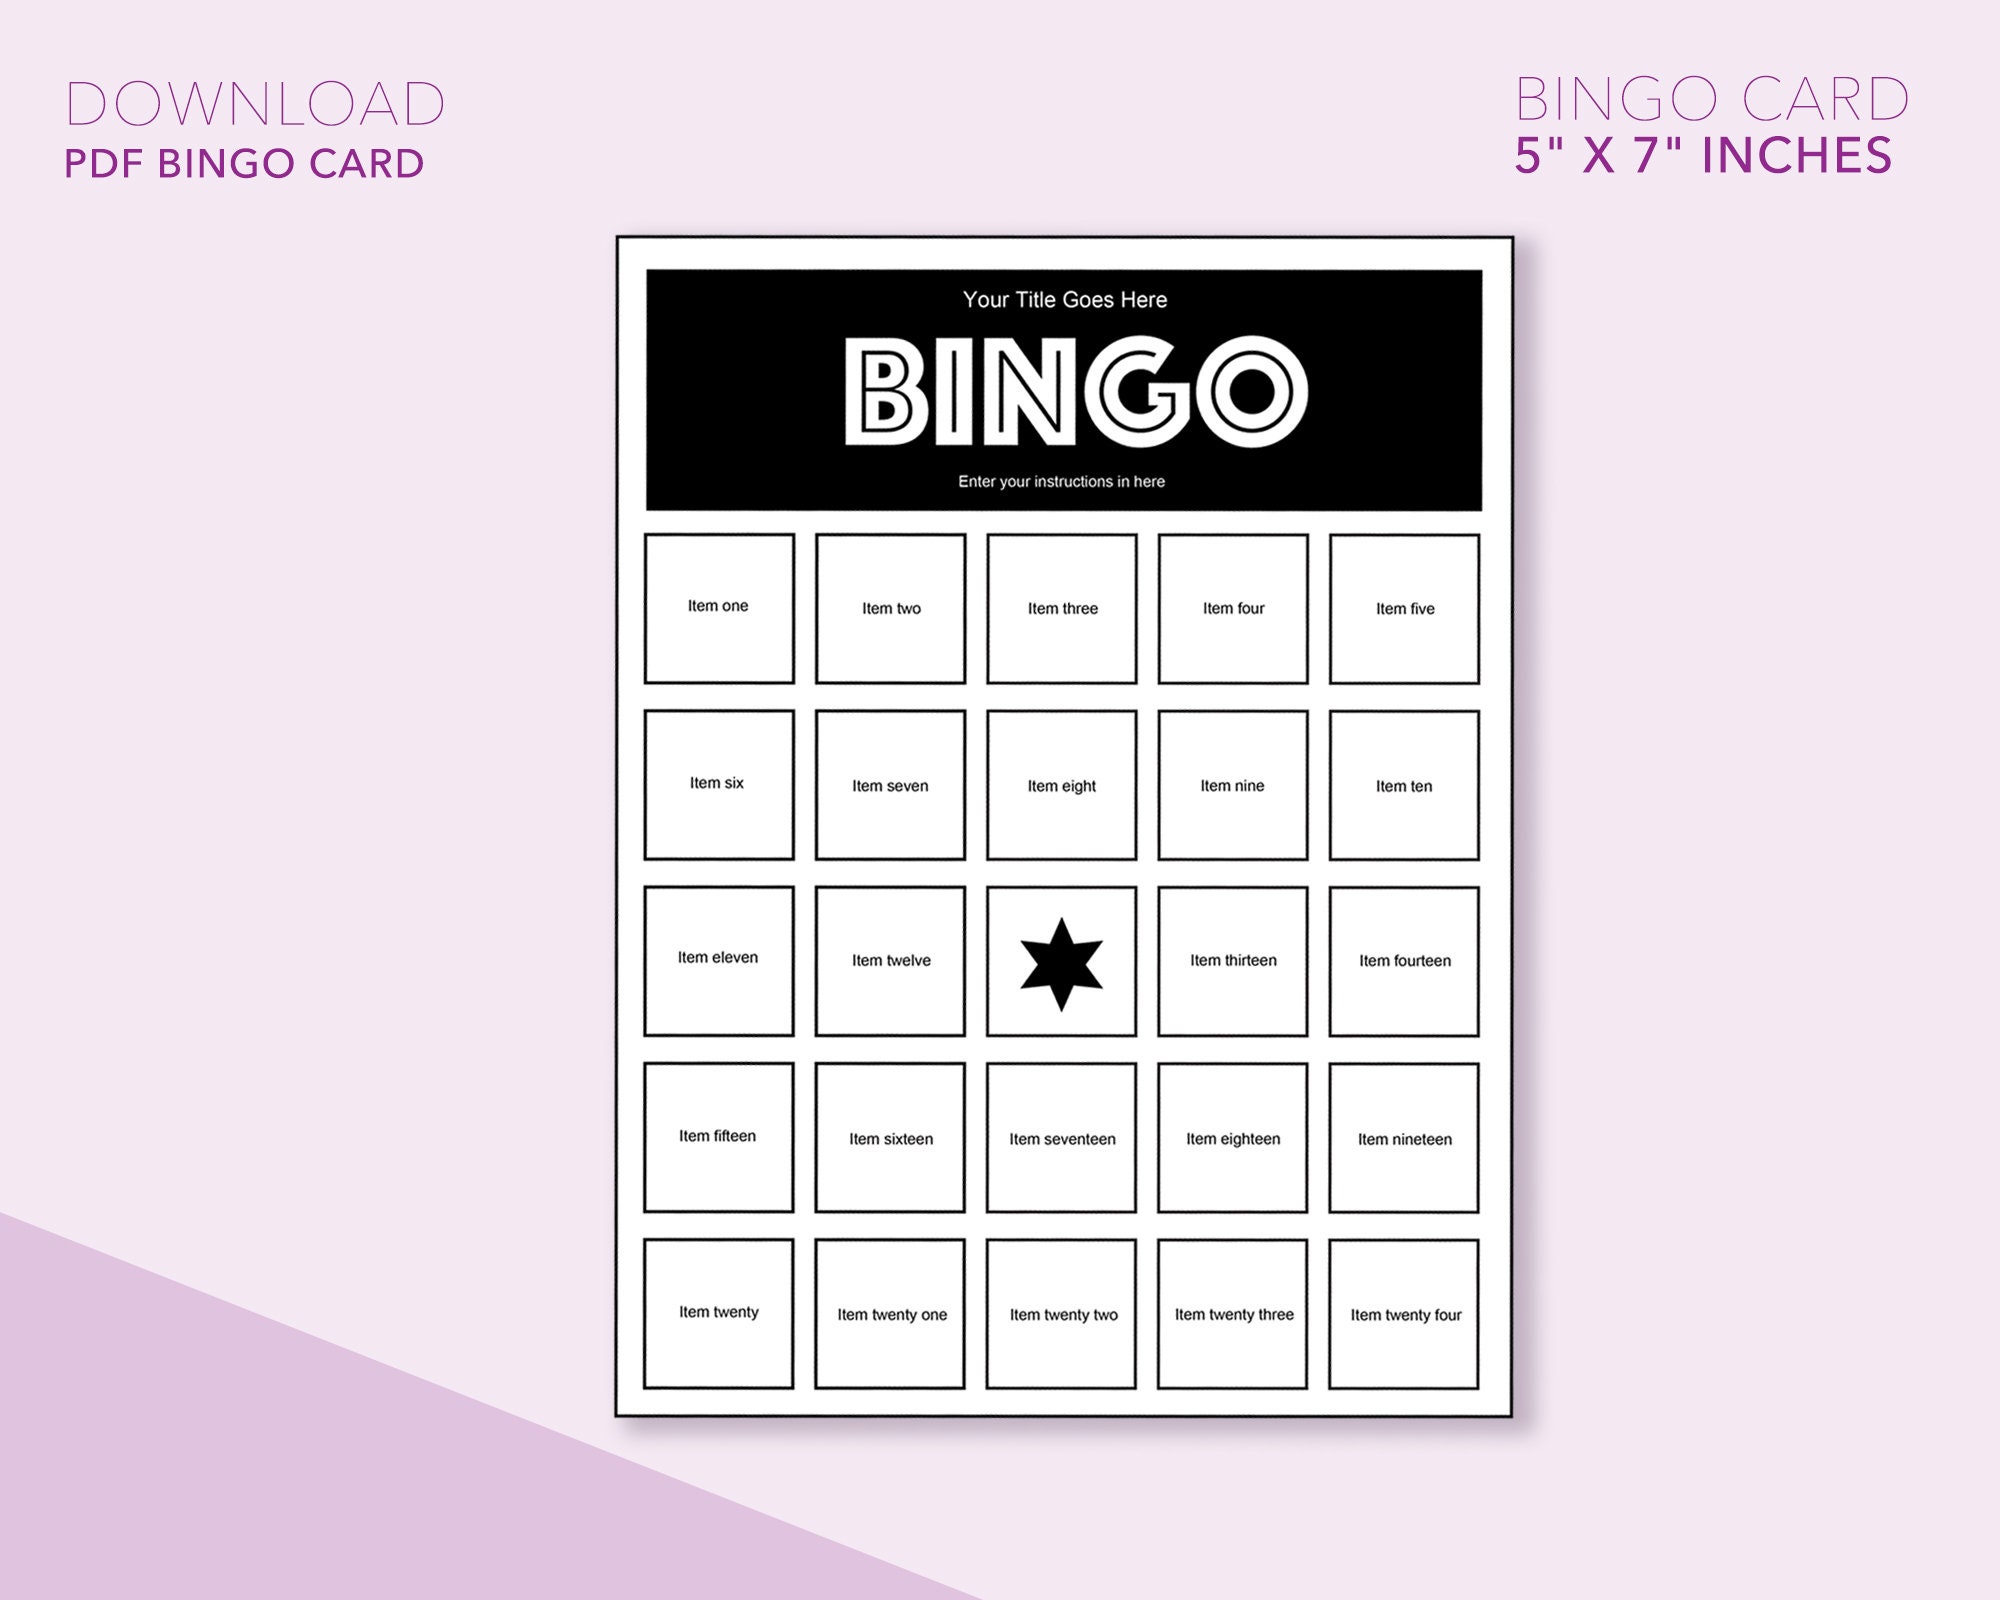 custom-bingo-card-generator-print-play-without-limits-bingo-card